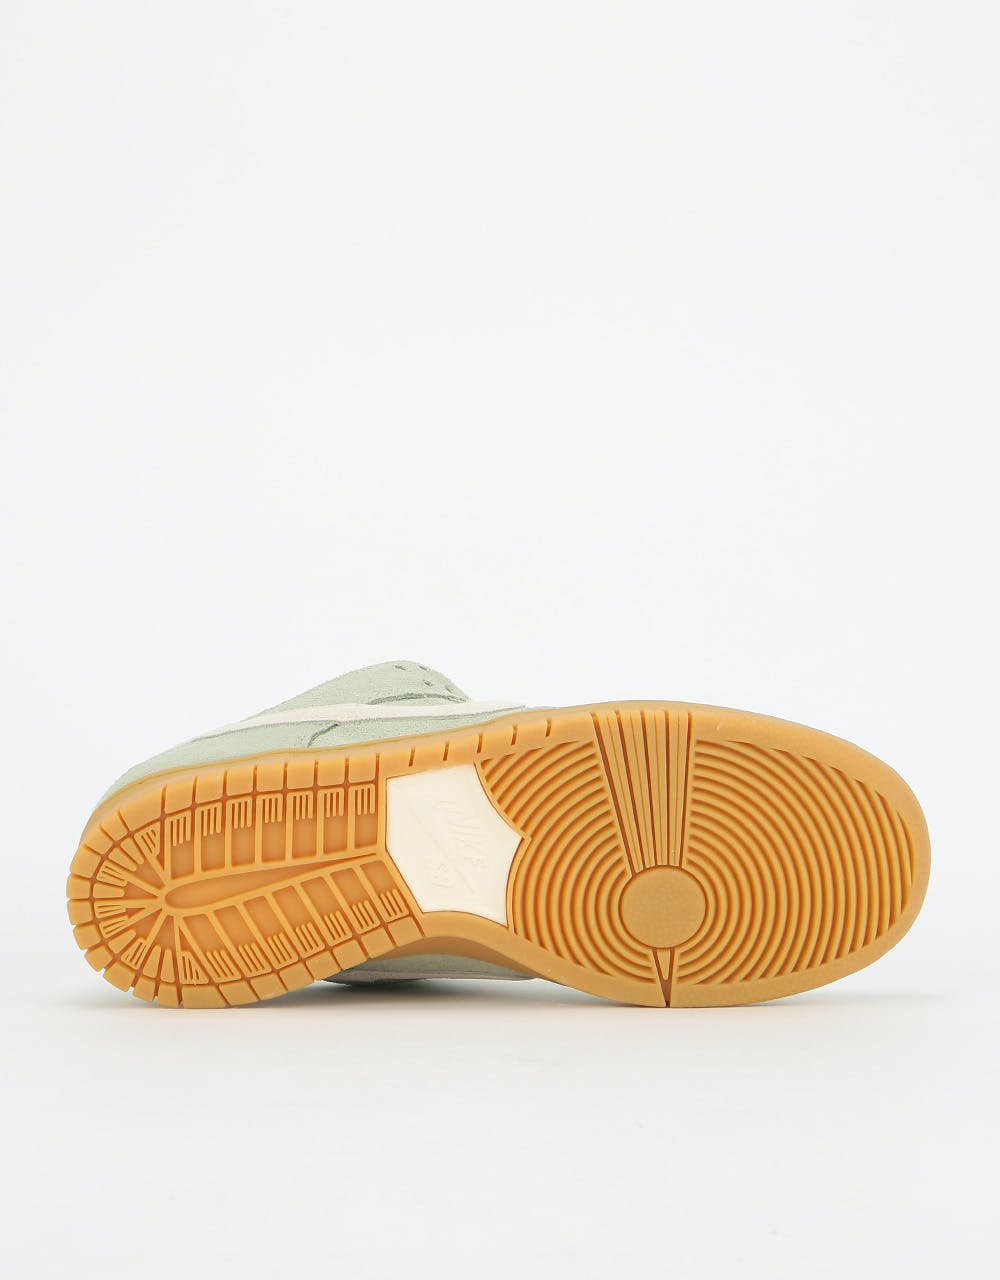 Nike SB Dunk Low Pro Skate Shoes - Jade Horizon/Pale Ivory